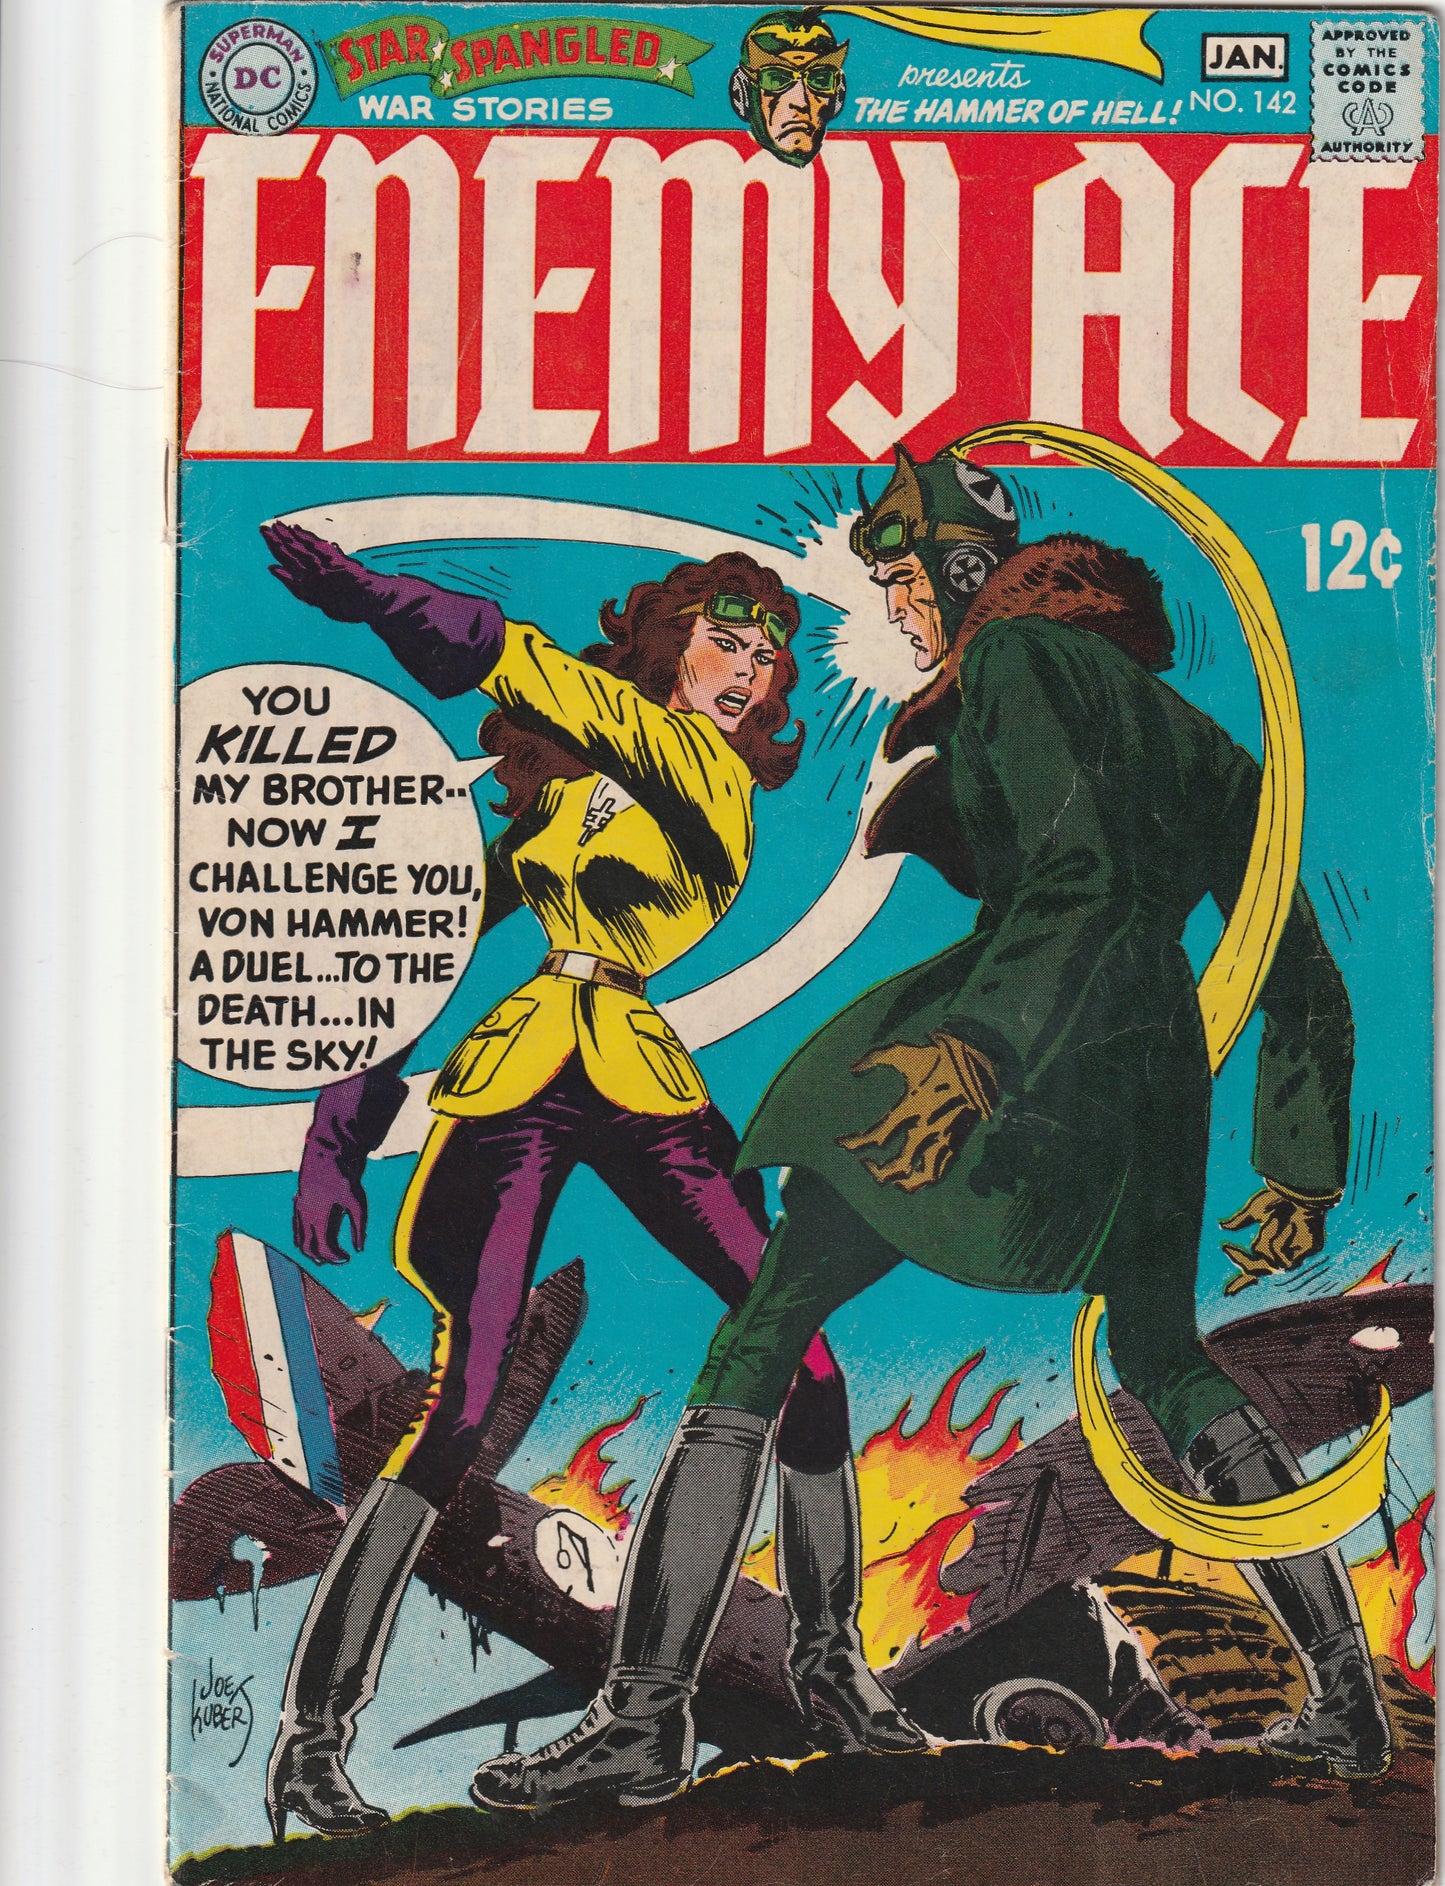 Star Spangled War Stories #142 (1968)